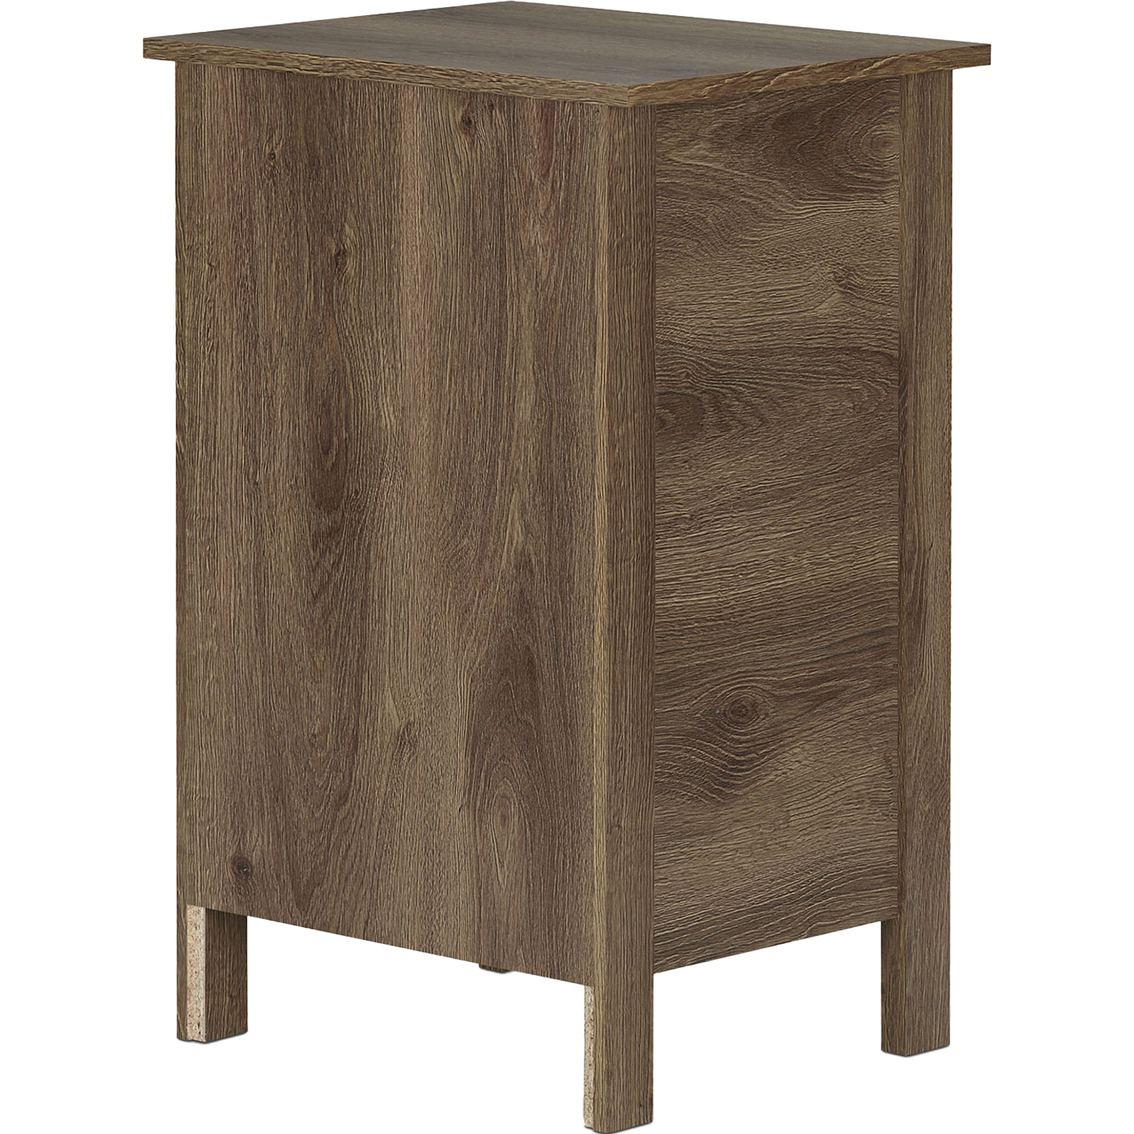 Furniture of America Daena Wood 3 Drawer Nightstand - Image 3 of 3